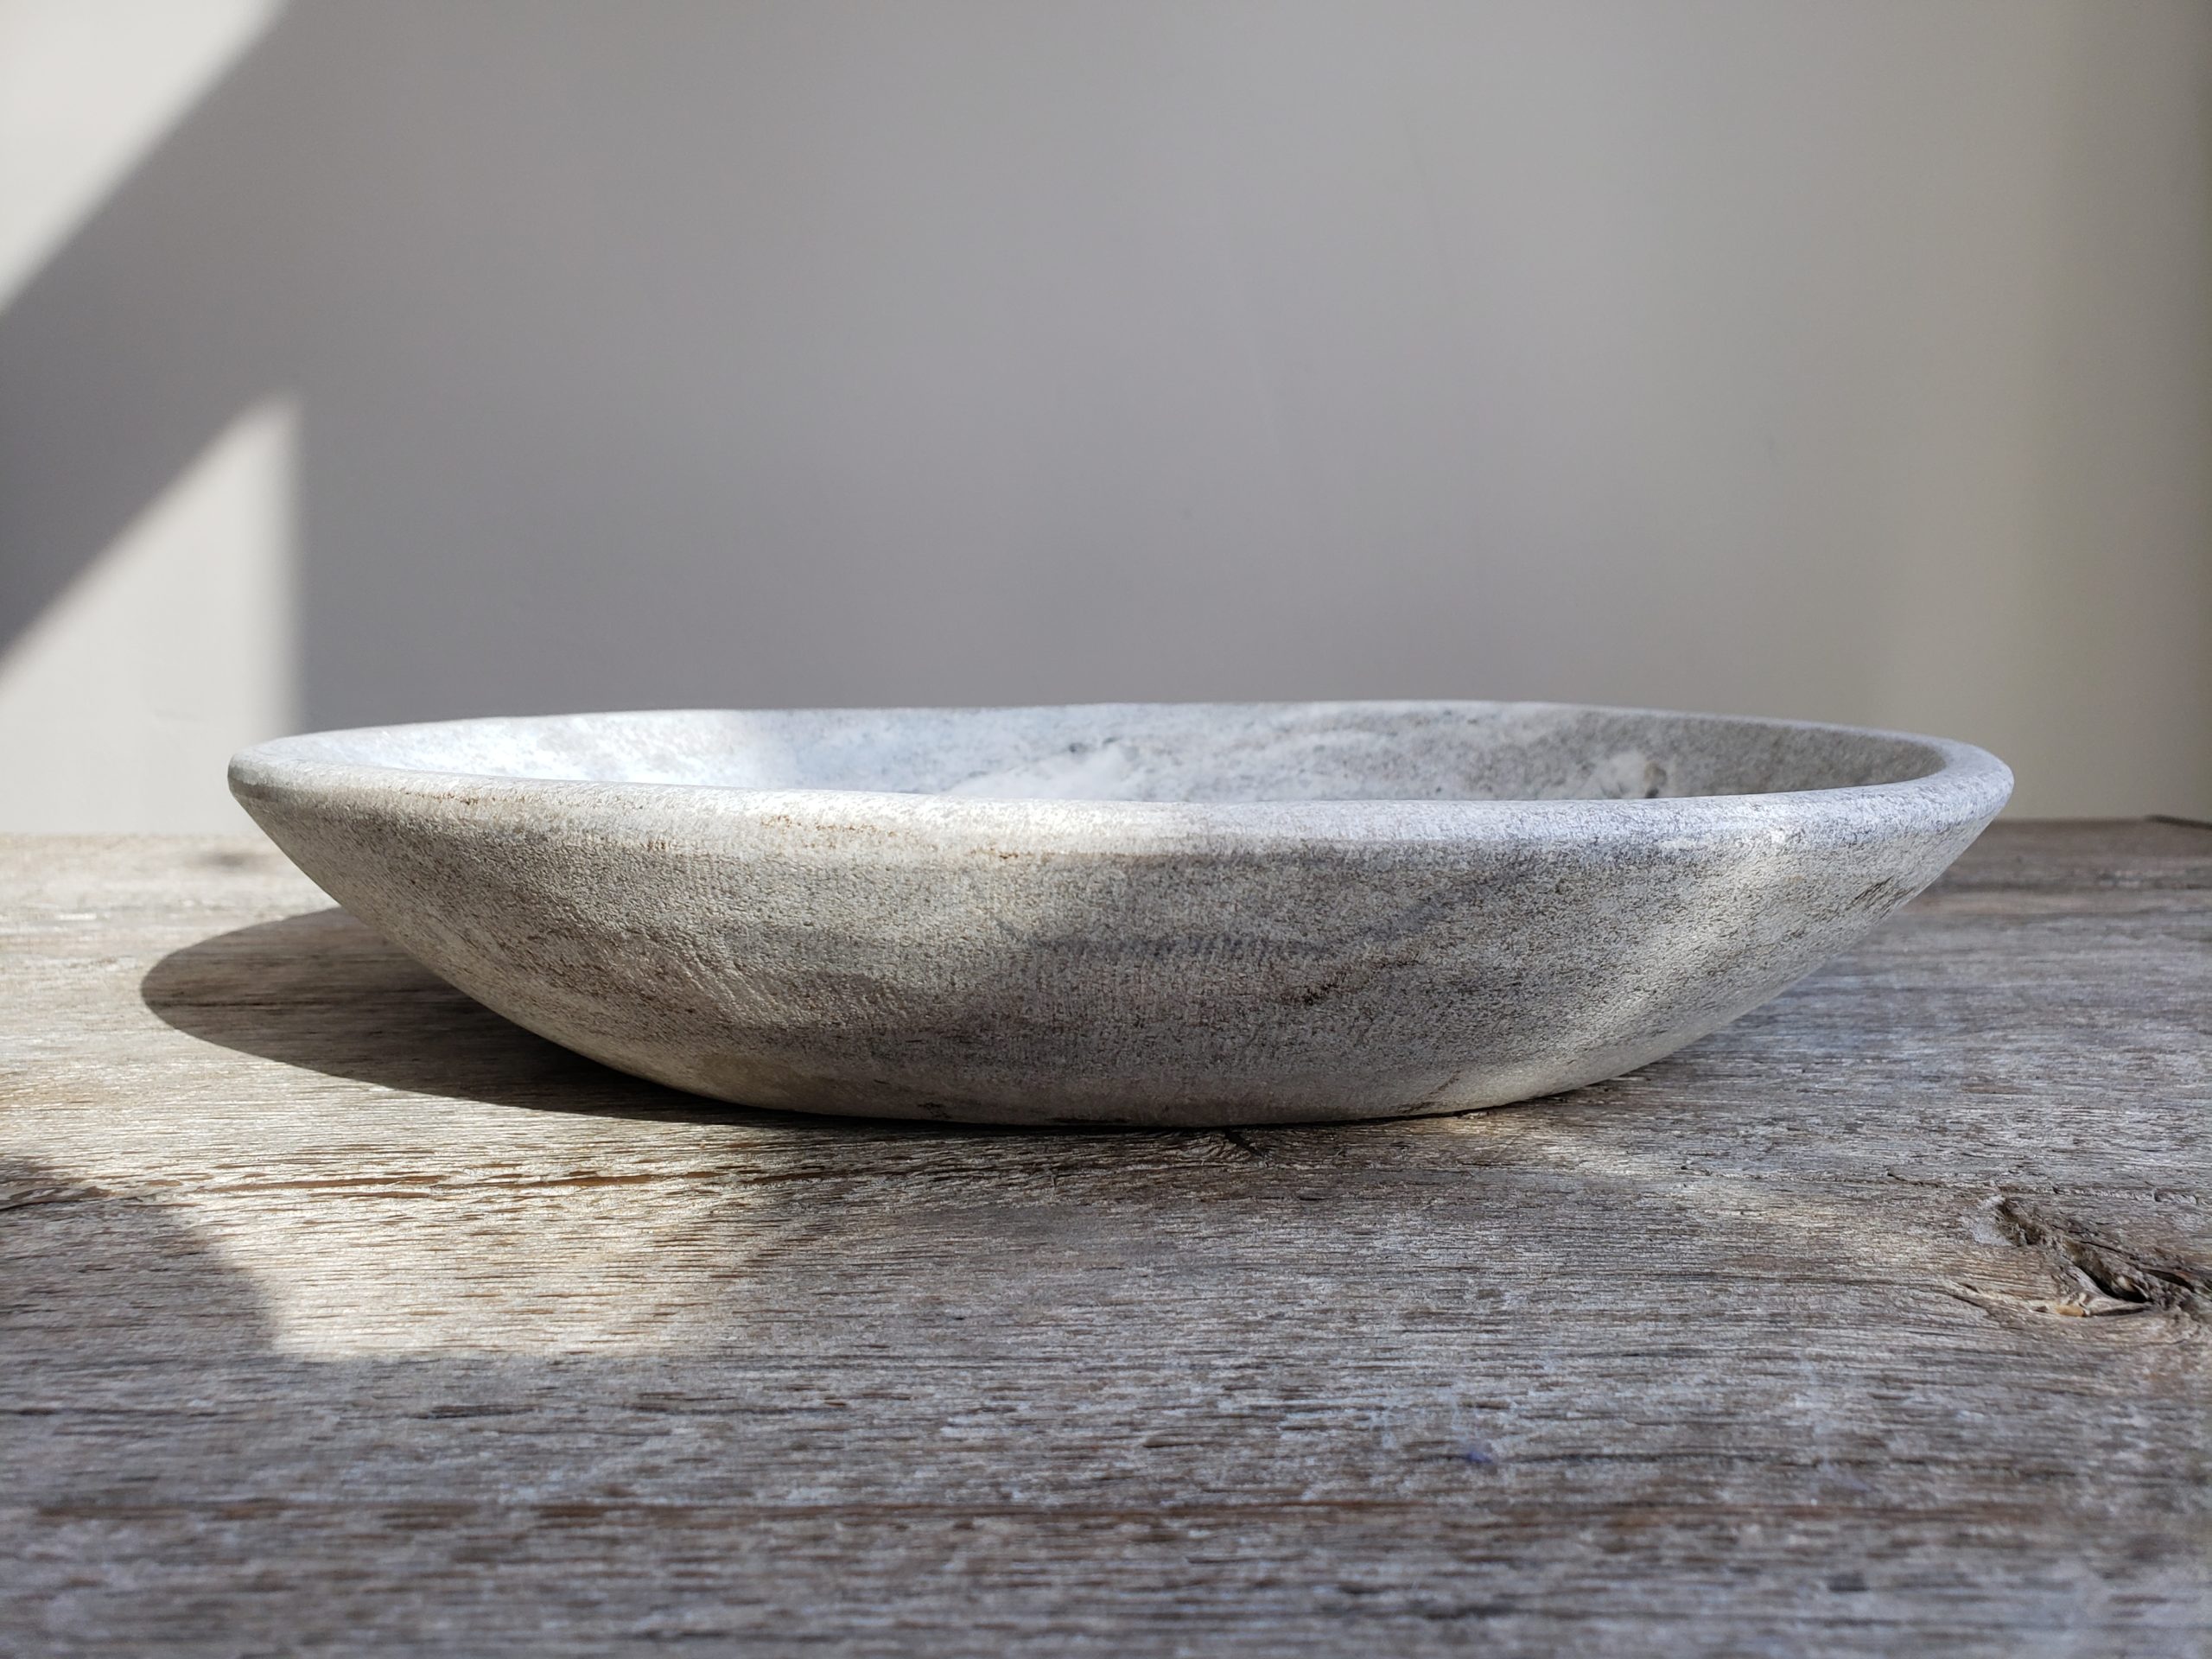 https://willwick.com/wp-content/uploads/2020/02/1.1397-Decorative-Stone-Bowl-5-scaled.jpg